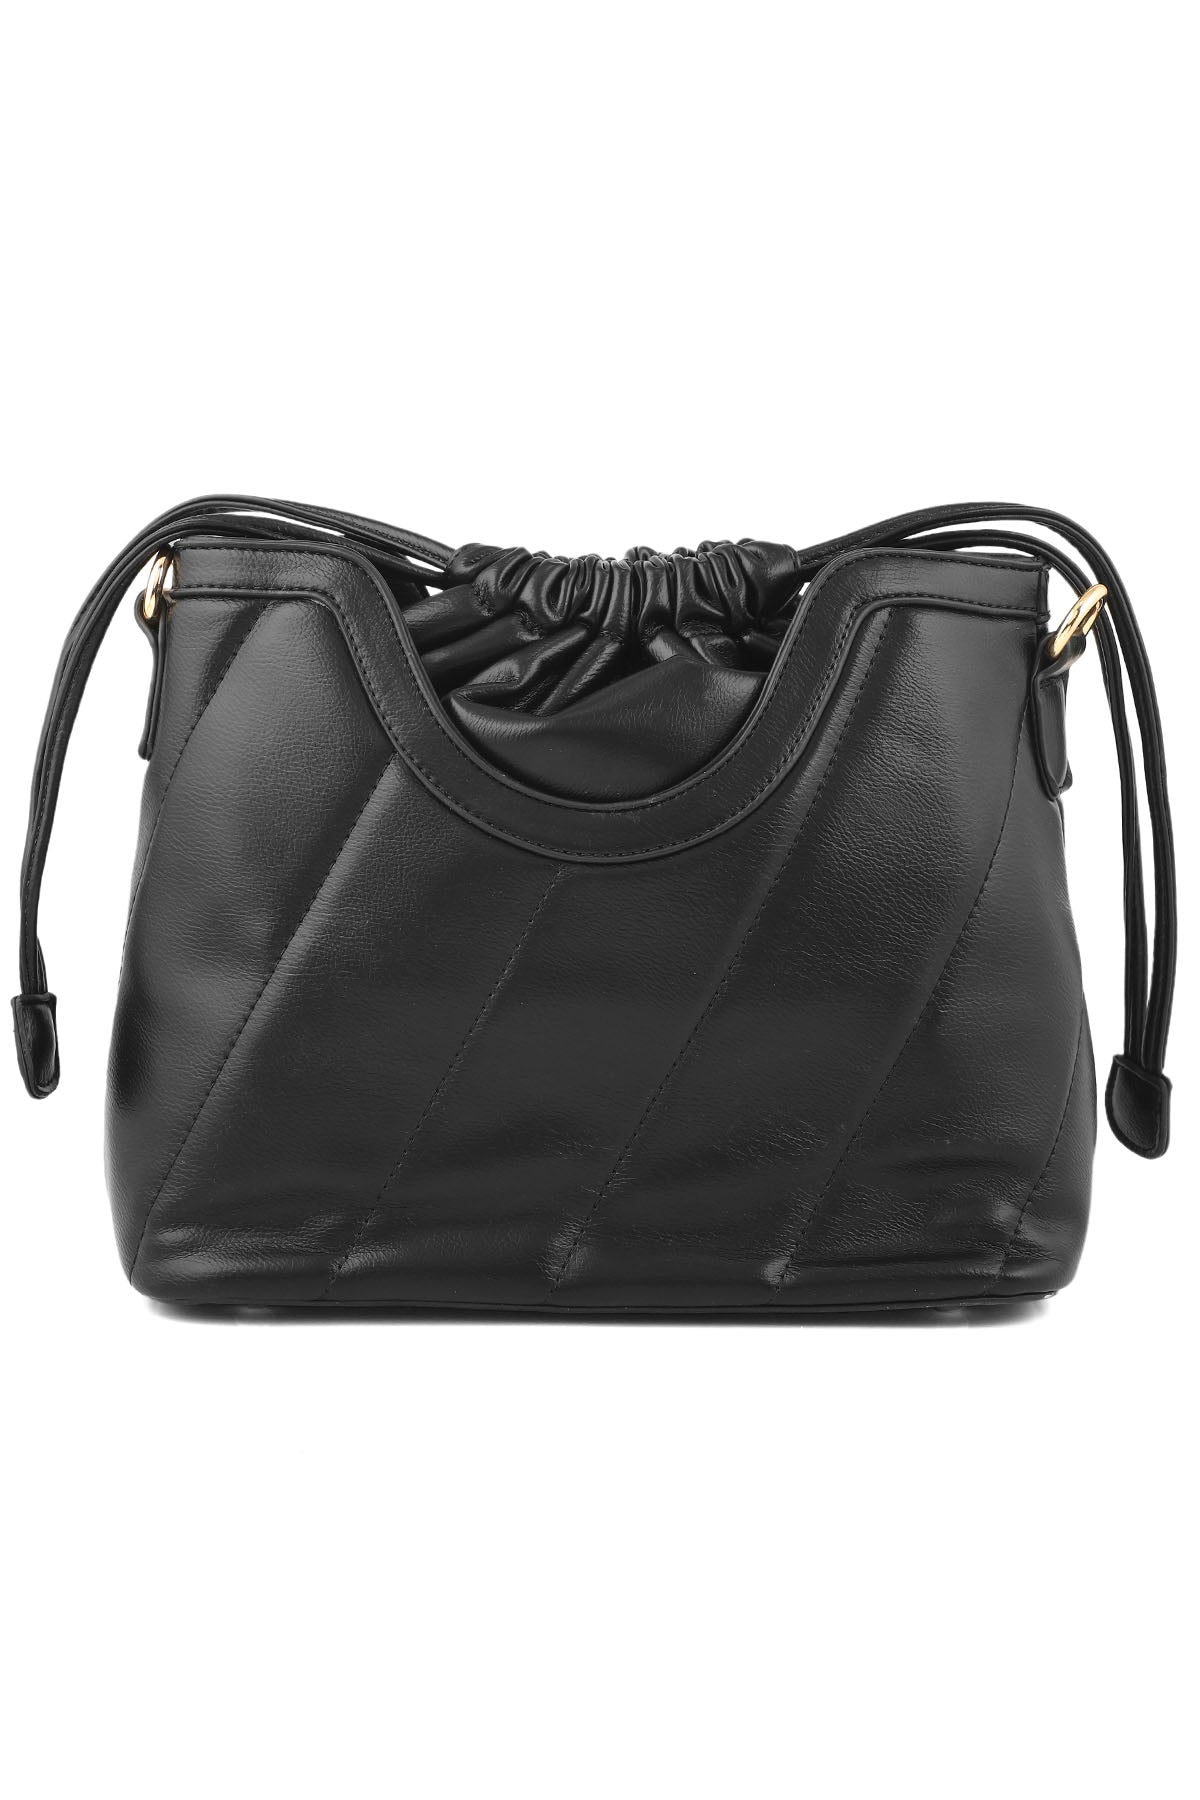 Hobo Hand Bags B15131-Black